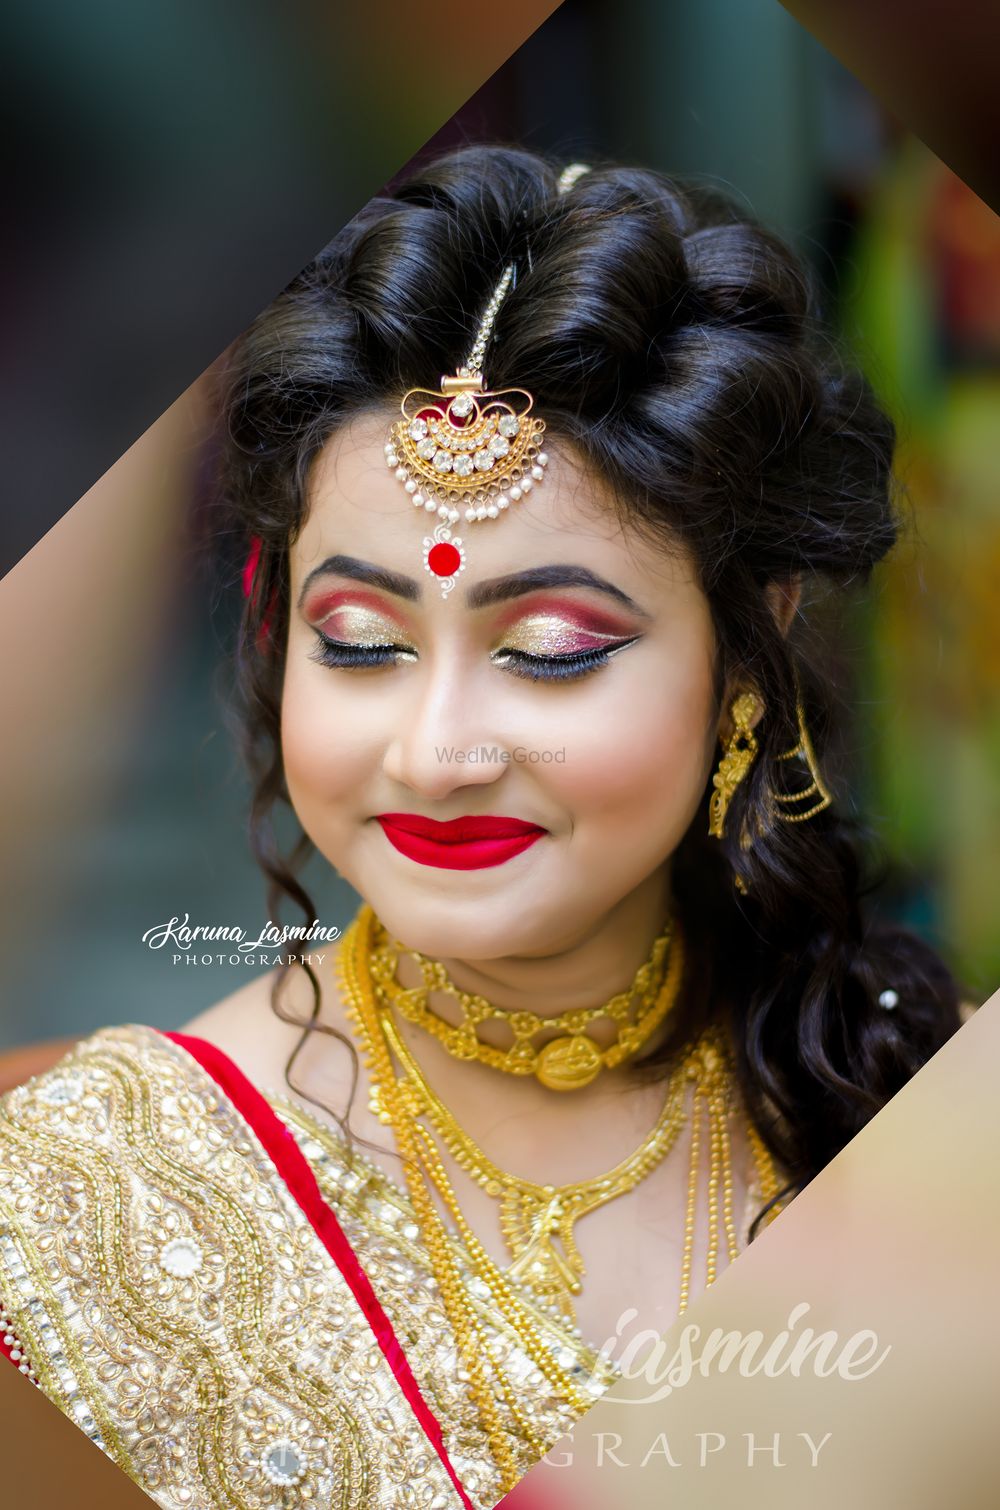 Photo From Beautiful Bride - By Karuna Jasmine Photography